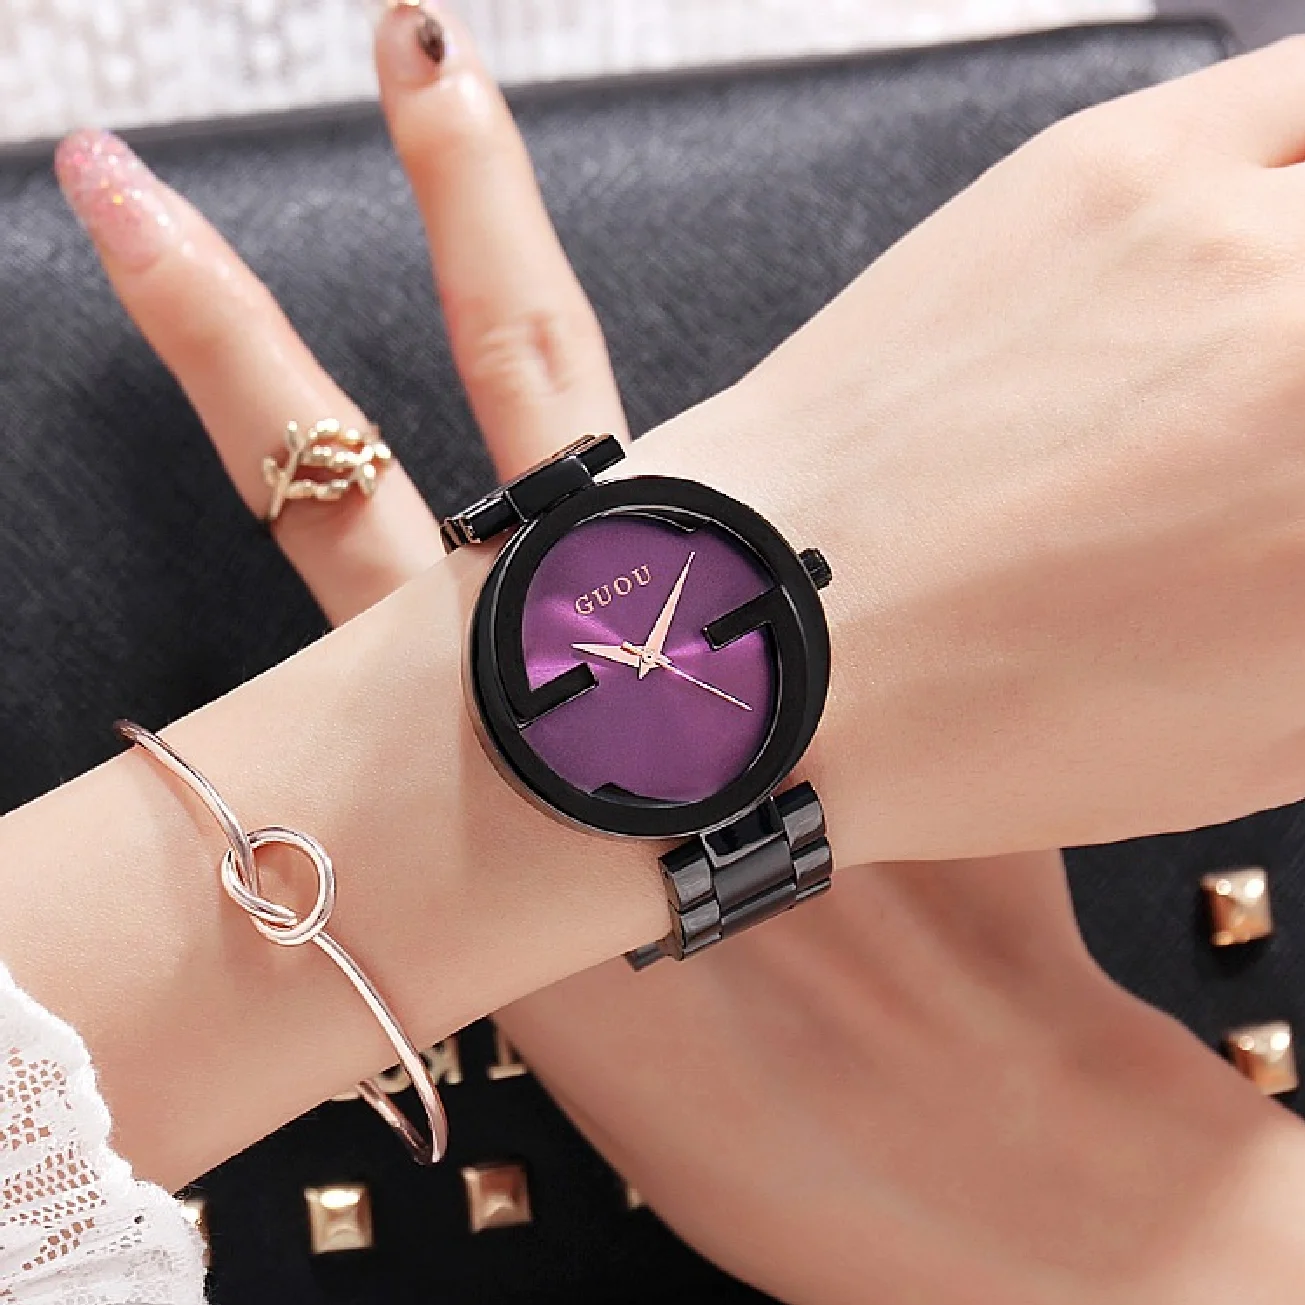 Enlarge GUOU Top Brand New Fashion Unique Women Quartz Watch relogio feminino lady Luxury Wristwatch Ladies Dress Hours Clock watches